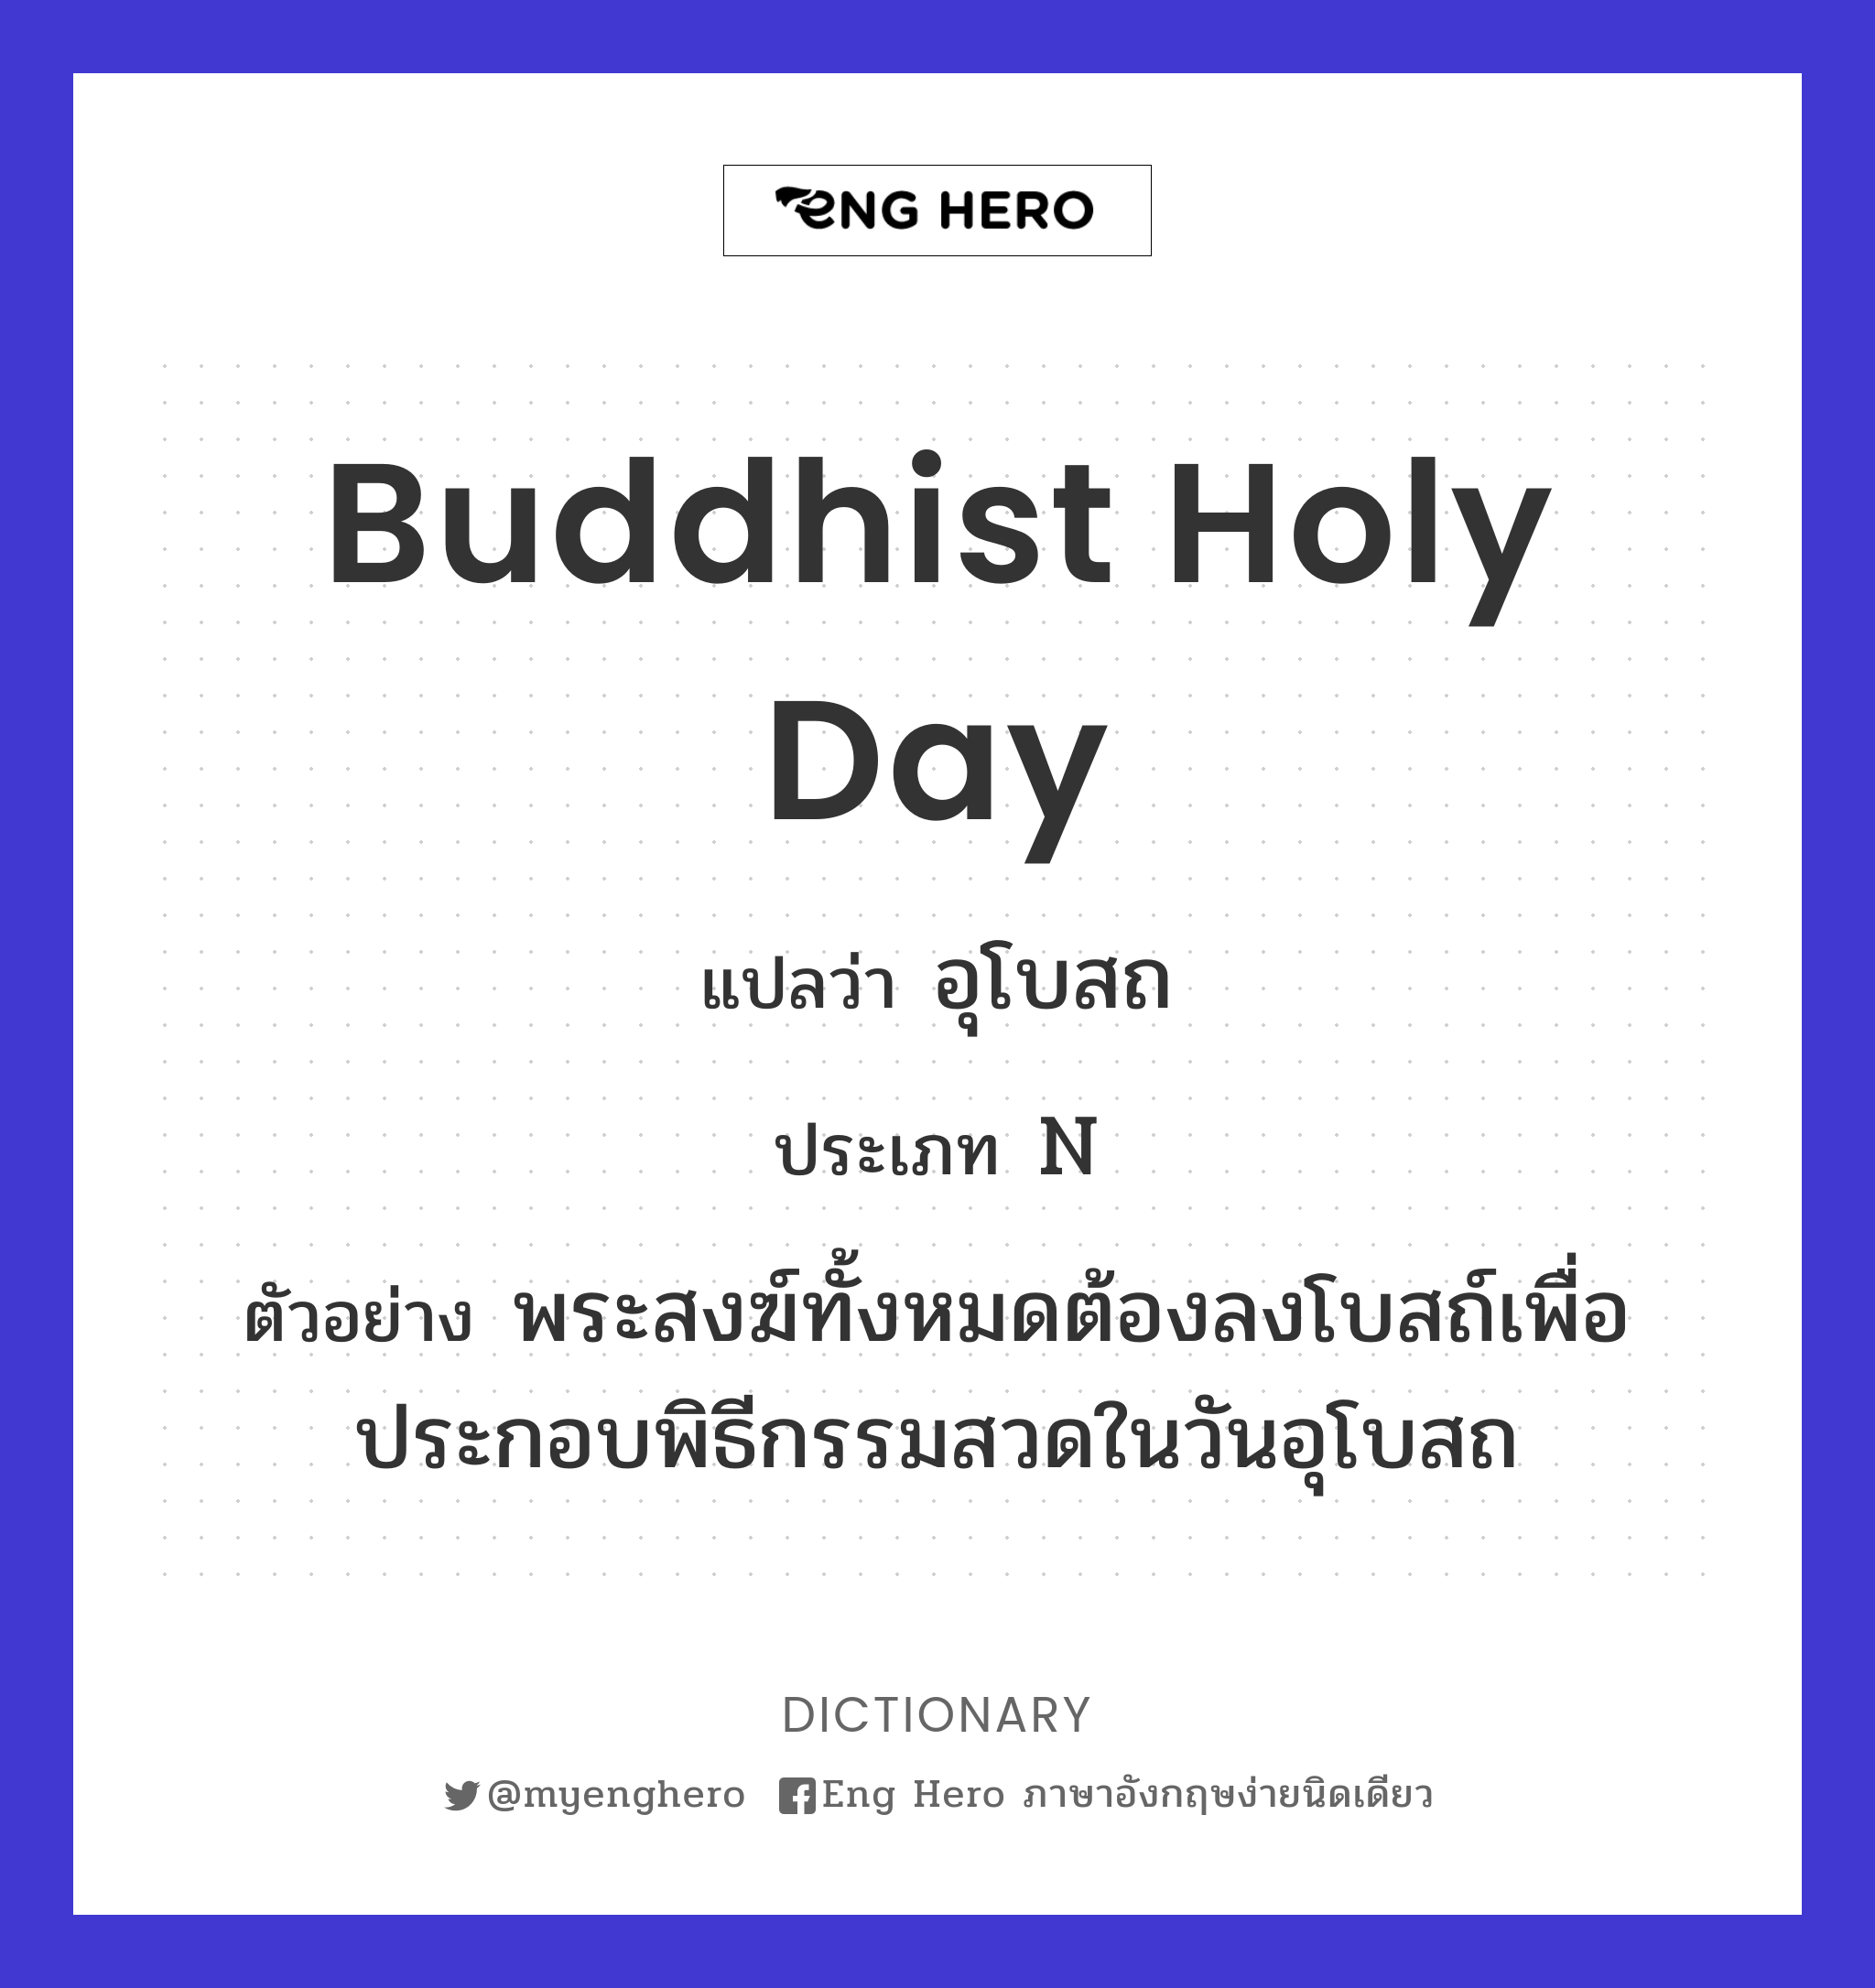 Buddhist holy day